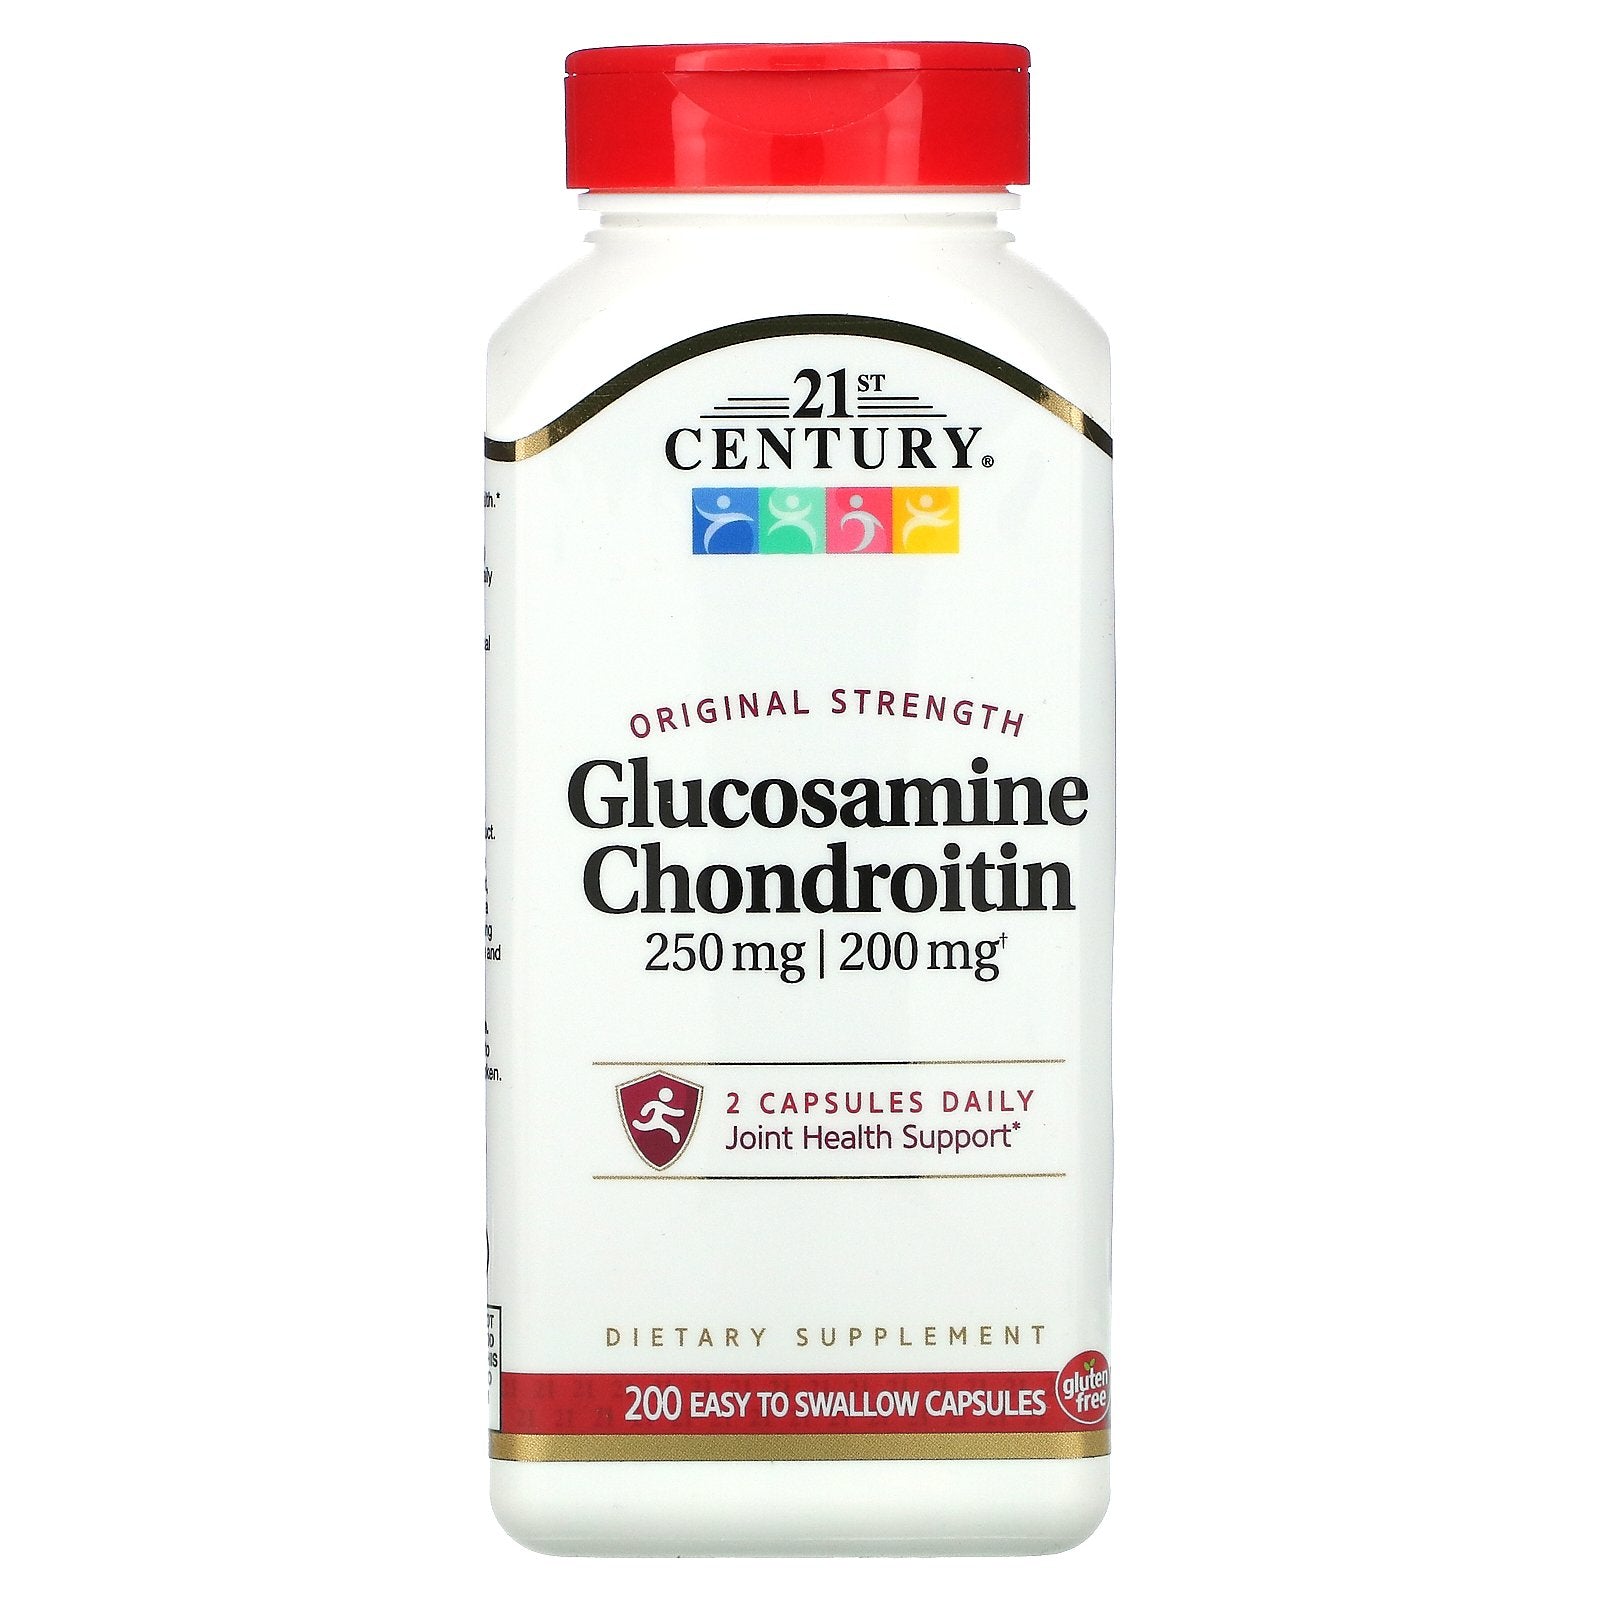 21st Century, Glucosamine / Chondroitin, Original Strength, 250 mg / 200 mg, 200 Easy to Swallow Capsules